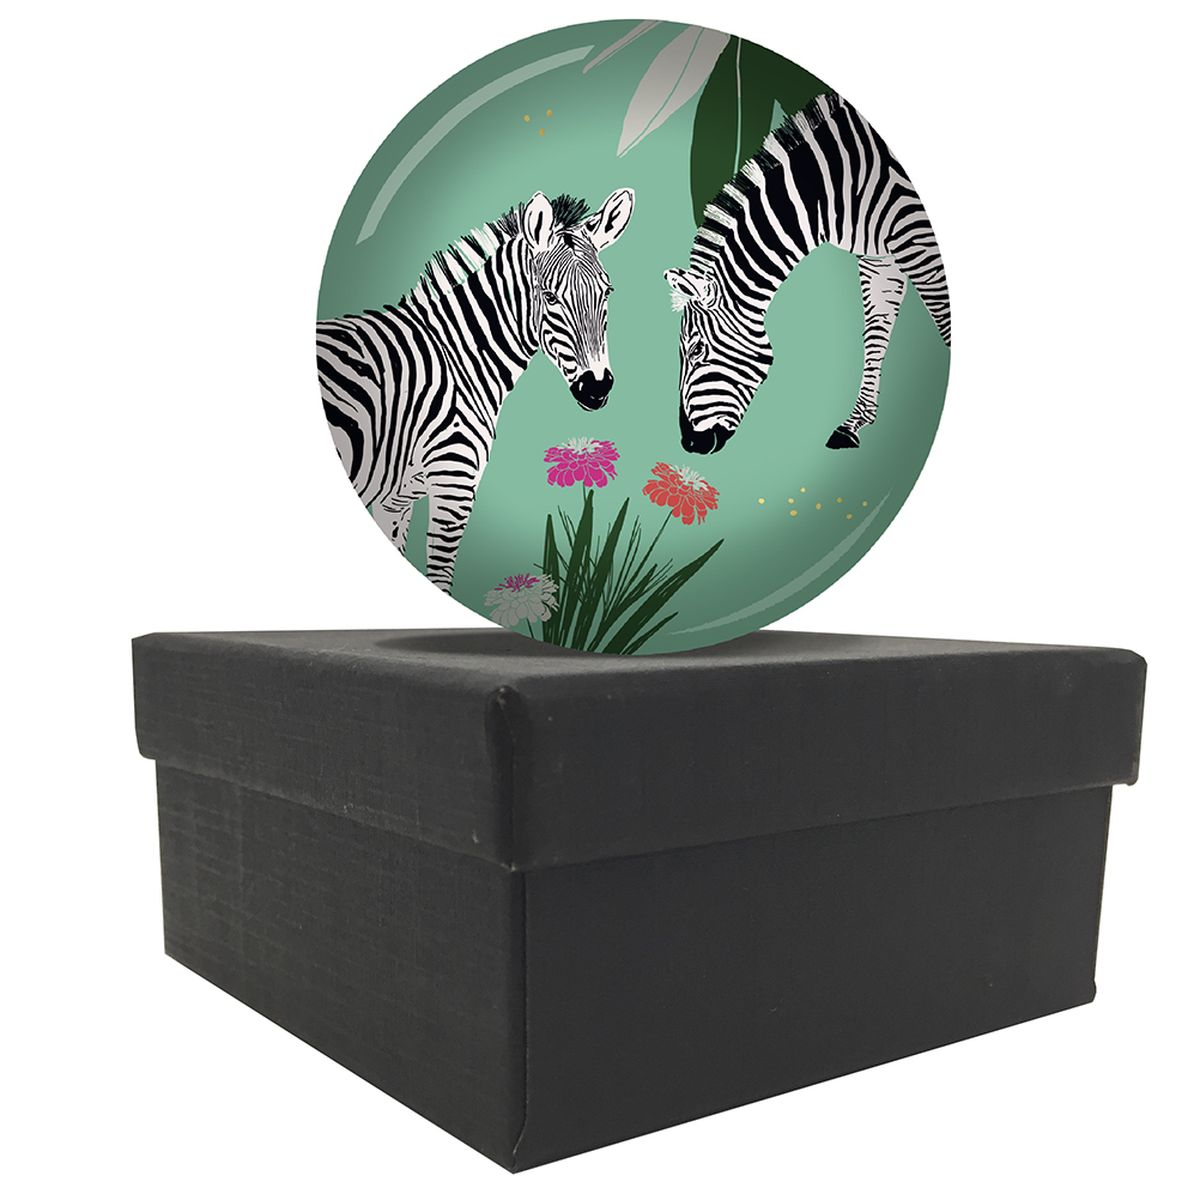 Kiub Savane paperweight - Zebras